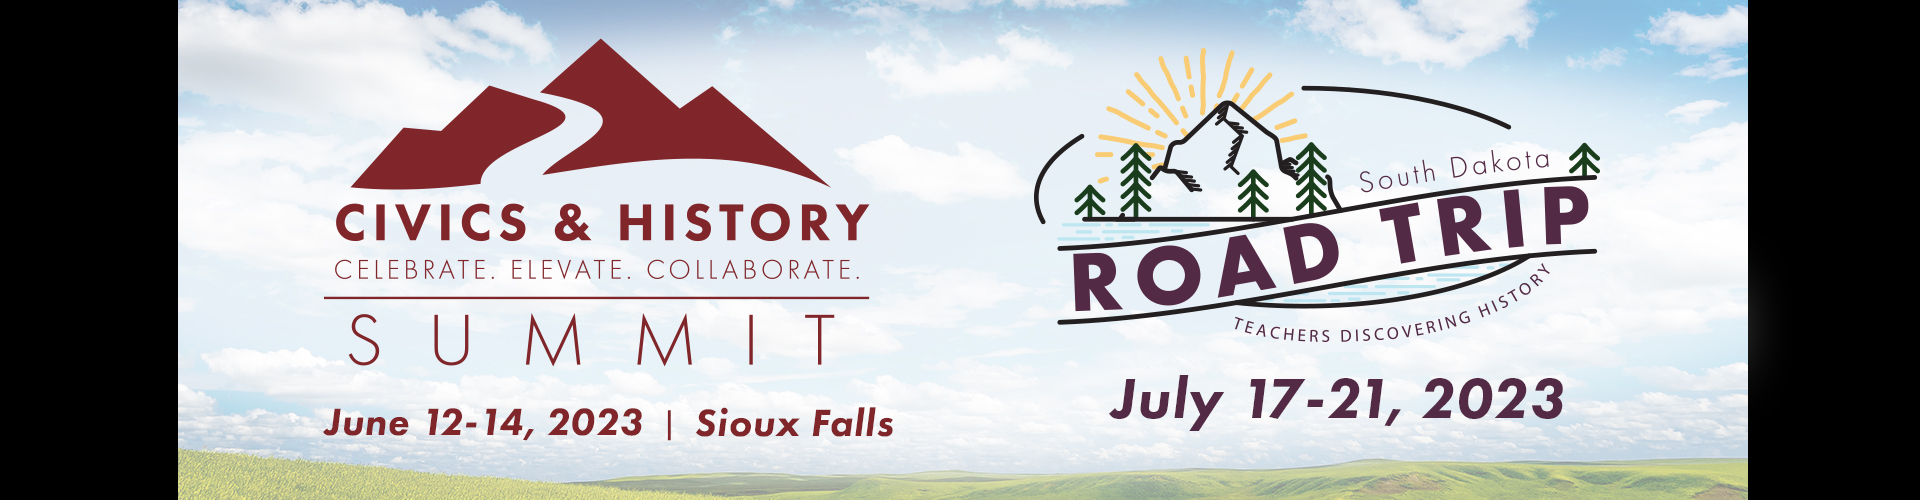 Civics & History. Summit. June 12-14, Sioux Falls. South Dakota Road Trip. July 17-21. Link.